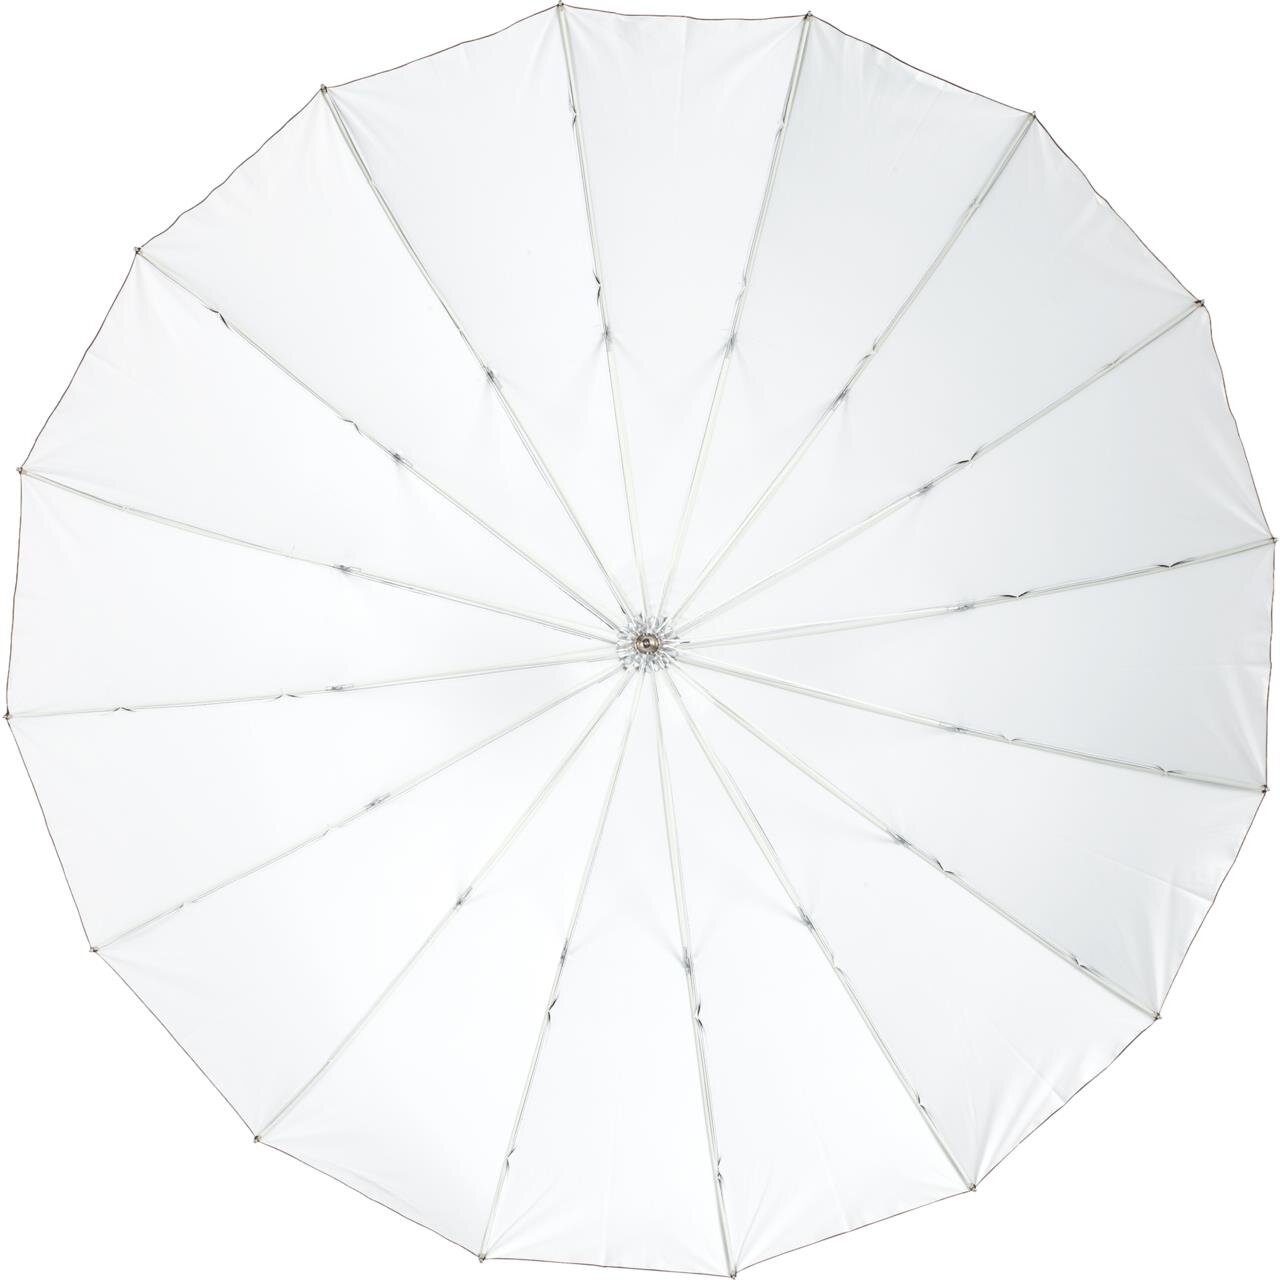 100986_b_profoto-umbrella-deep-white-m-front_productimage.png.jpeg